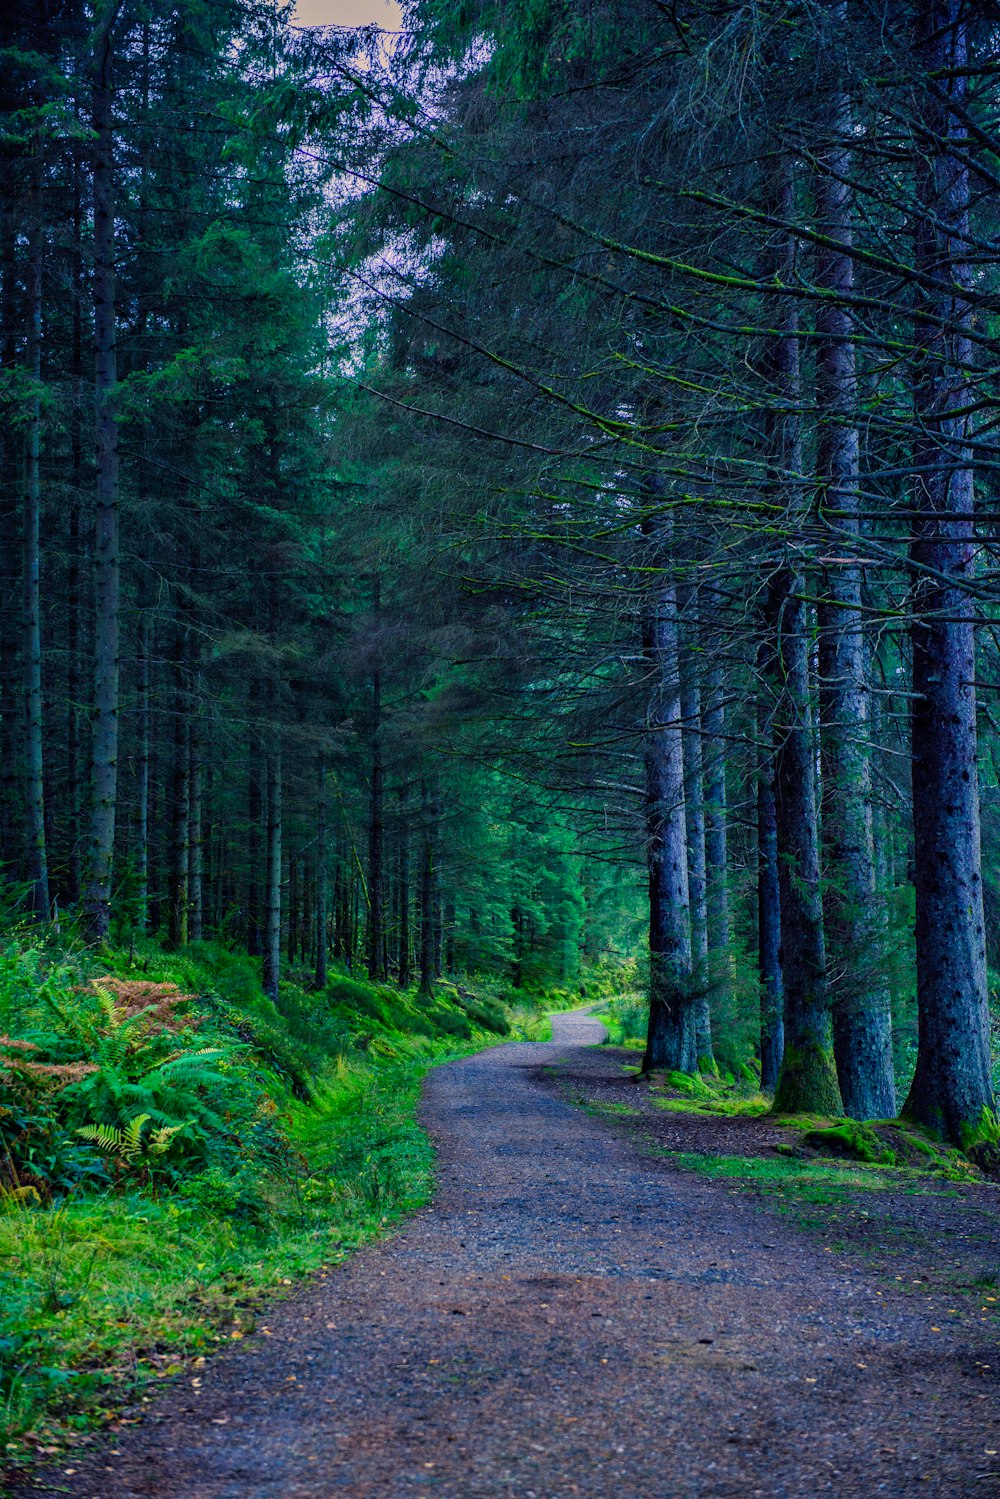 Un sendero en medio de un bosque con árboles altos